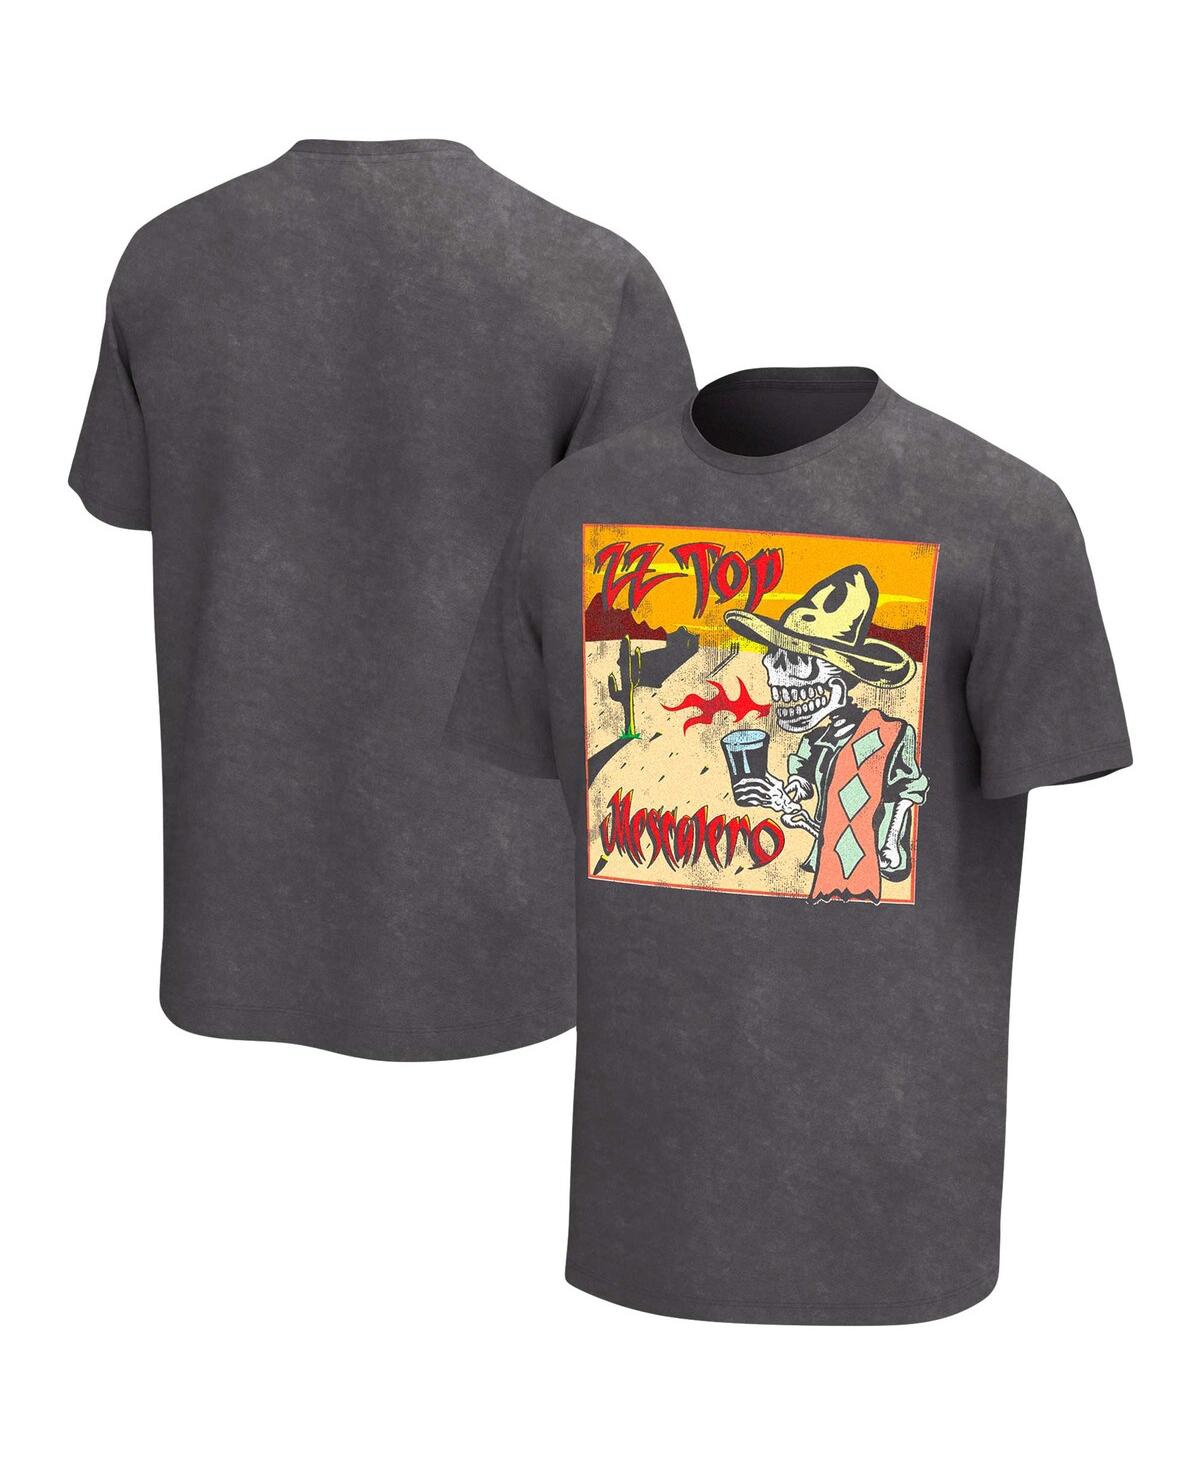 Philcos Men's Charcoal Zz Top Mescalero Washed Graphic T-shirt